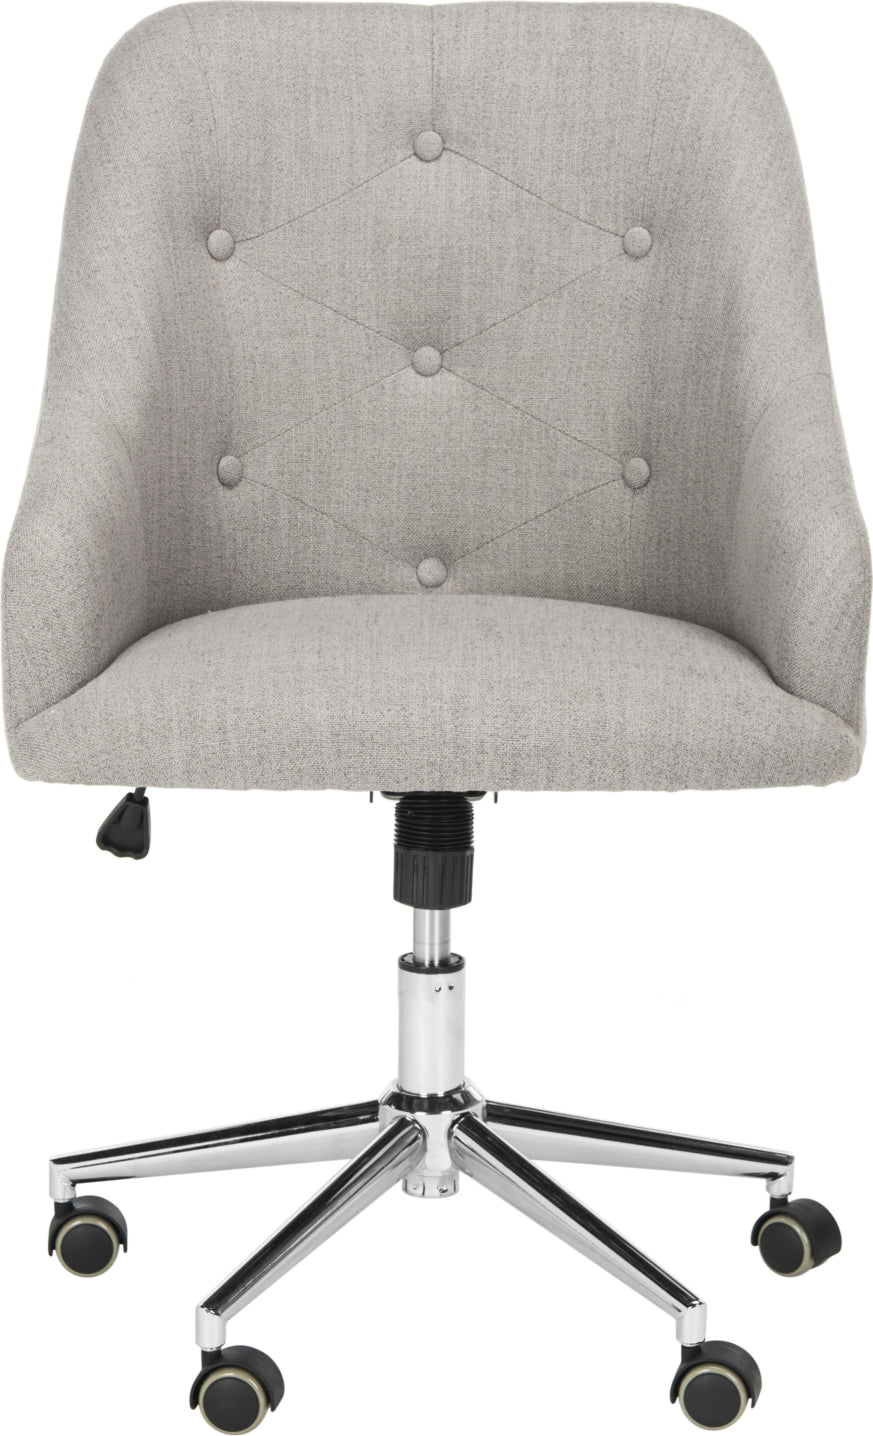 Safavieh Evelynn Tufted Linen Chrome Leg Swivel Office Chair Grey and Furniture main image